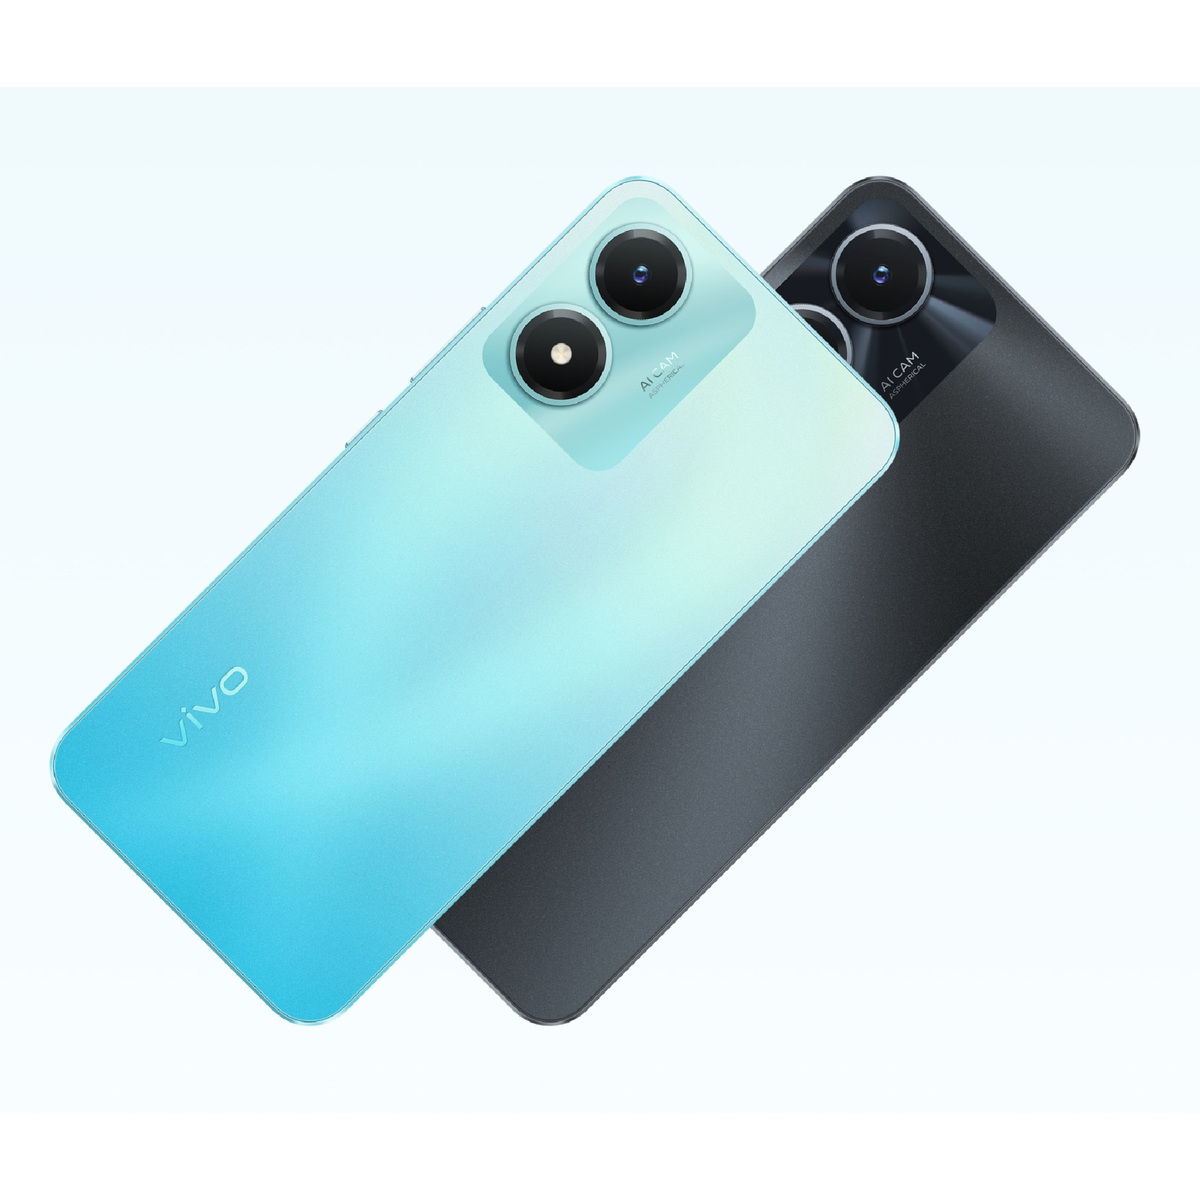 فيفو Y02s هاتف ذكي بشريحتين 4G ، و 3 جيجا رام ، 32 جيجا مساحة تخزين ، أزرق